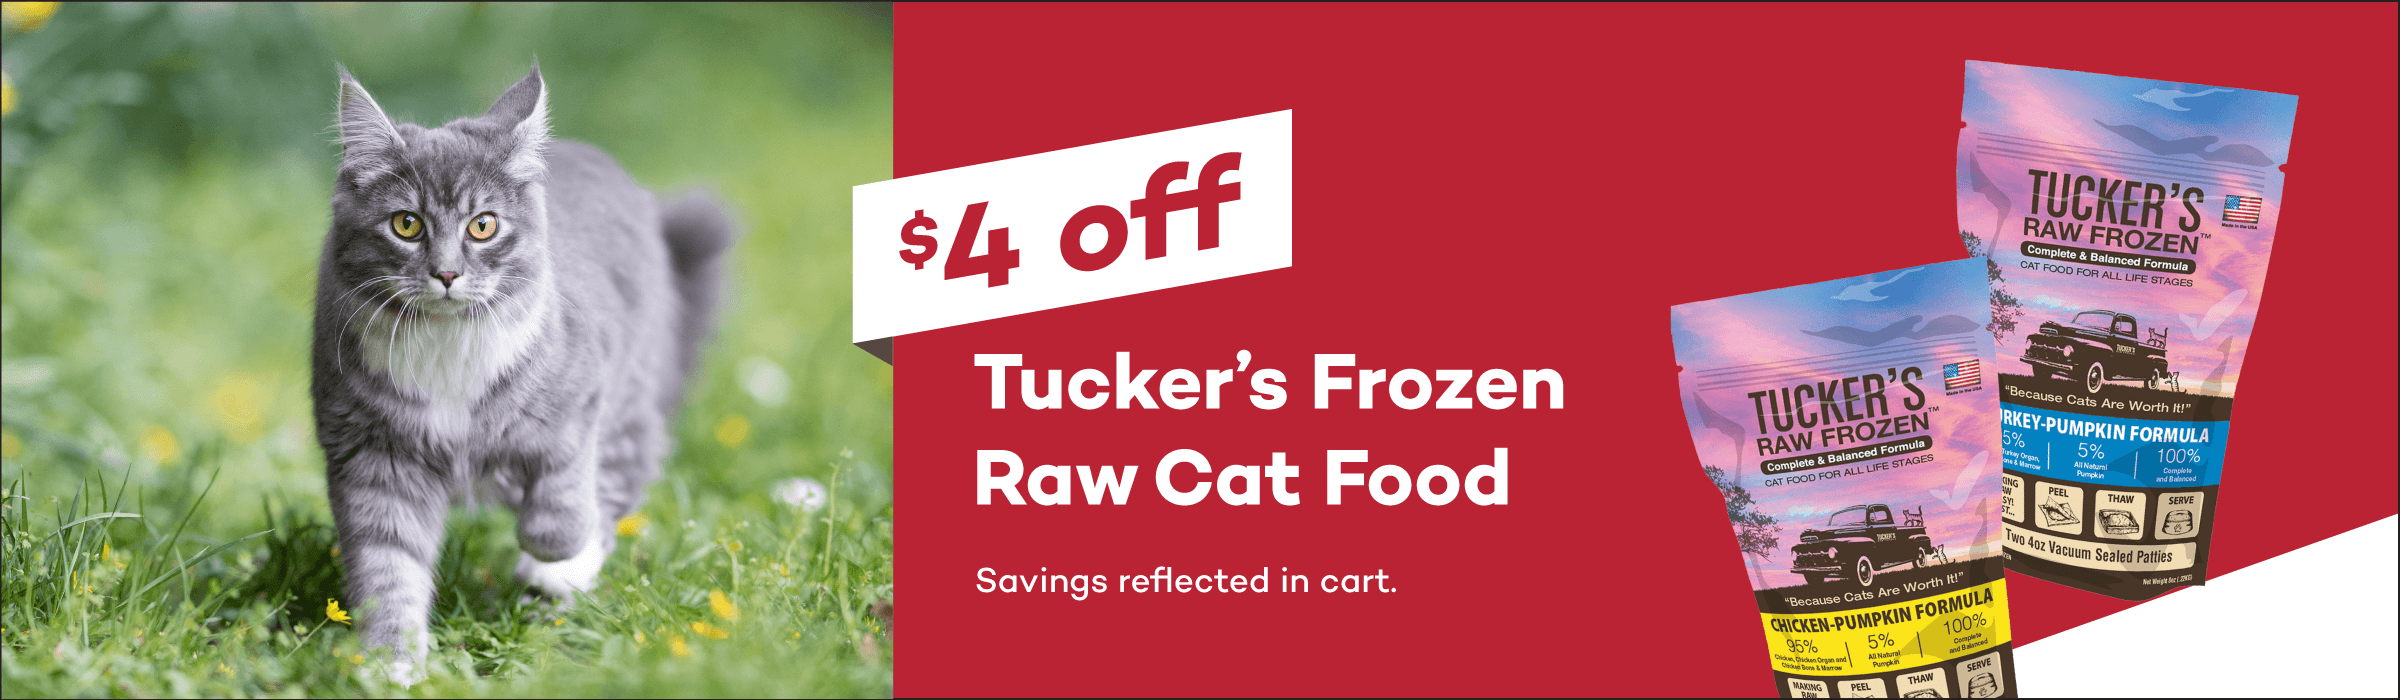 $4 off Tucker's Frozen Raw Cat Food. Savings reflected in cart.